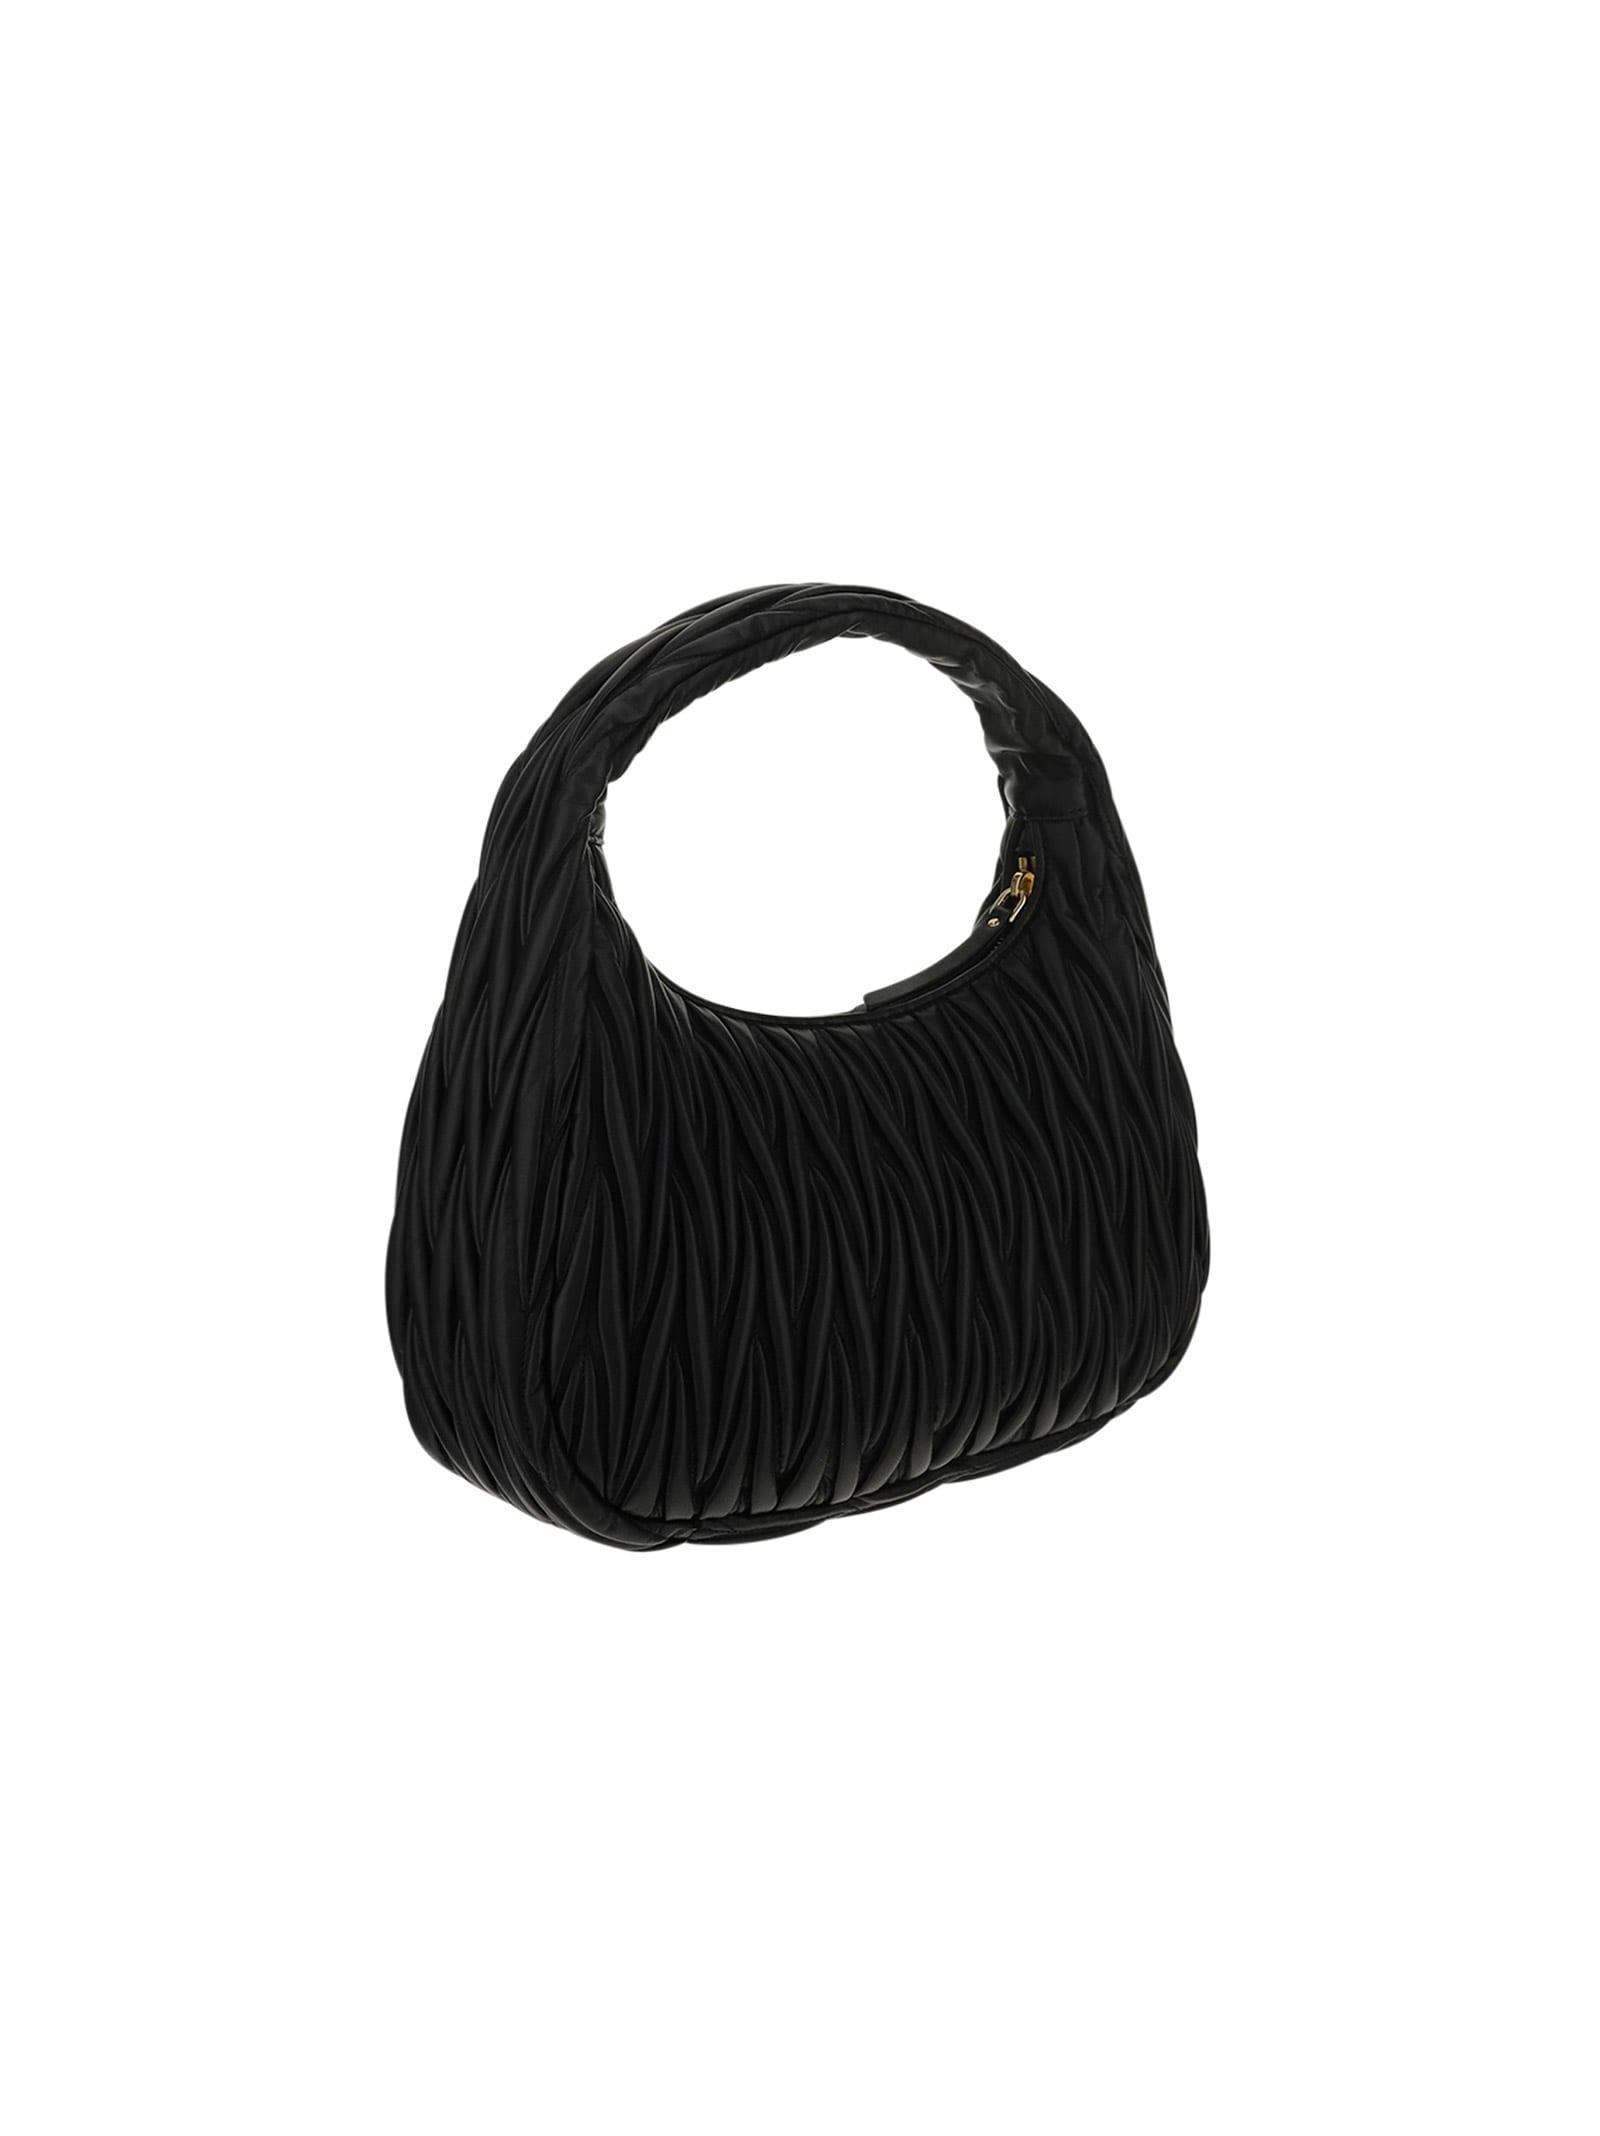 Miu Miu Wander Matelassé Shoulder Bag in Black